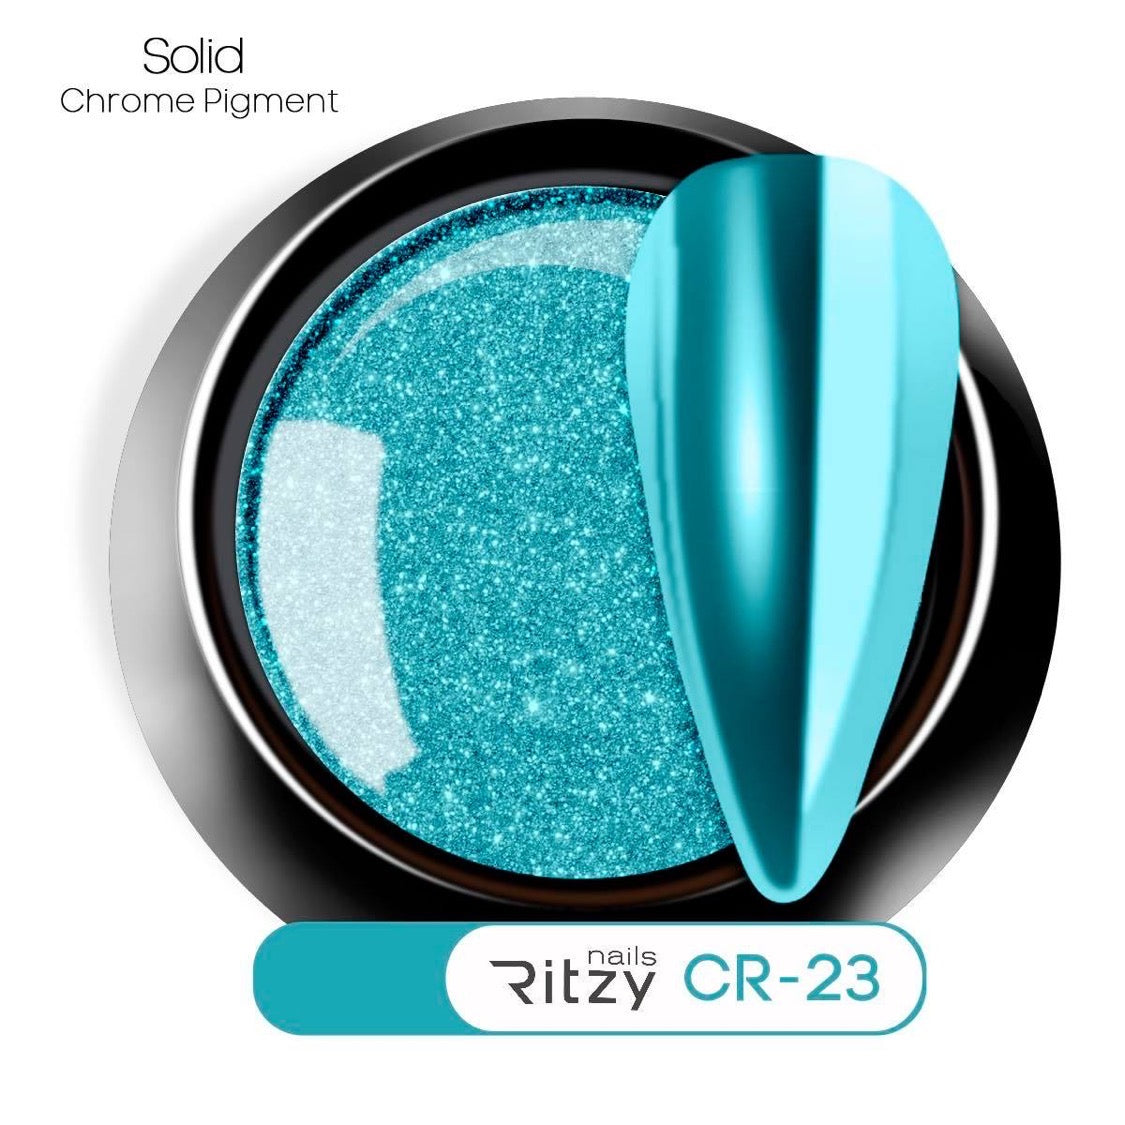 Chrome pigment CR-23